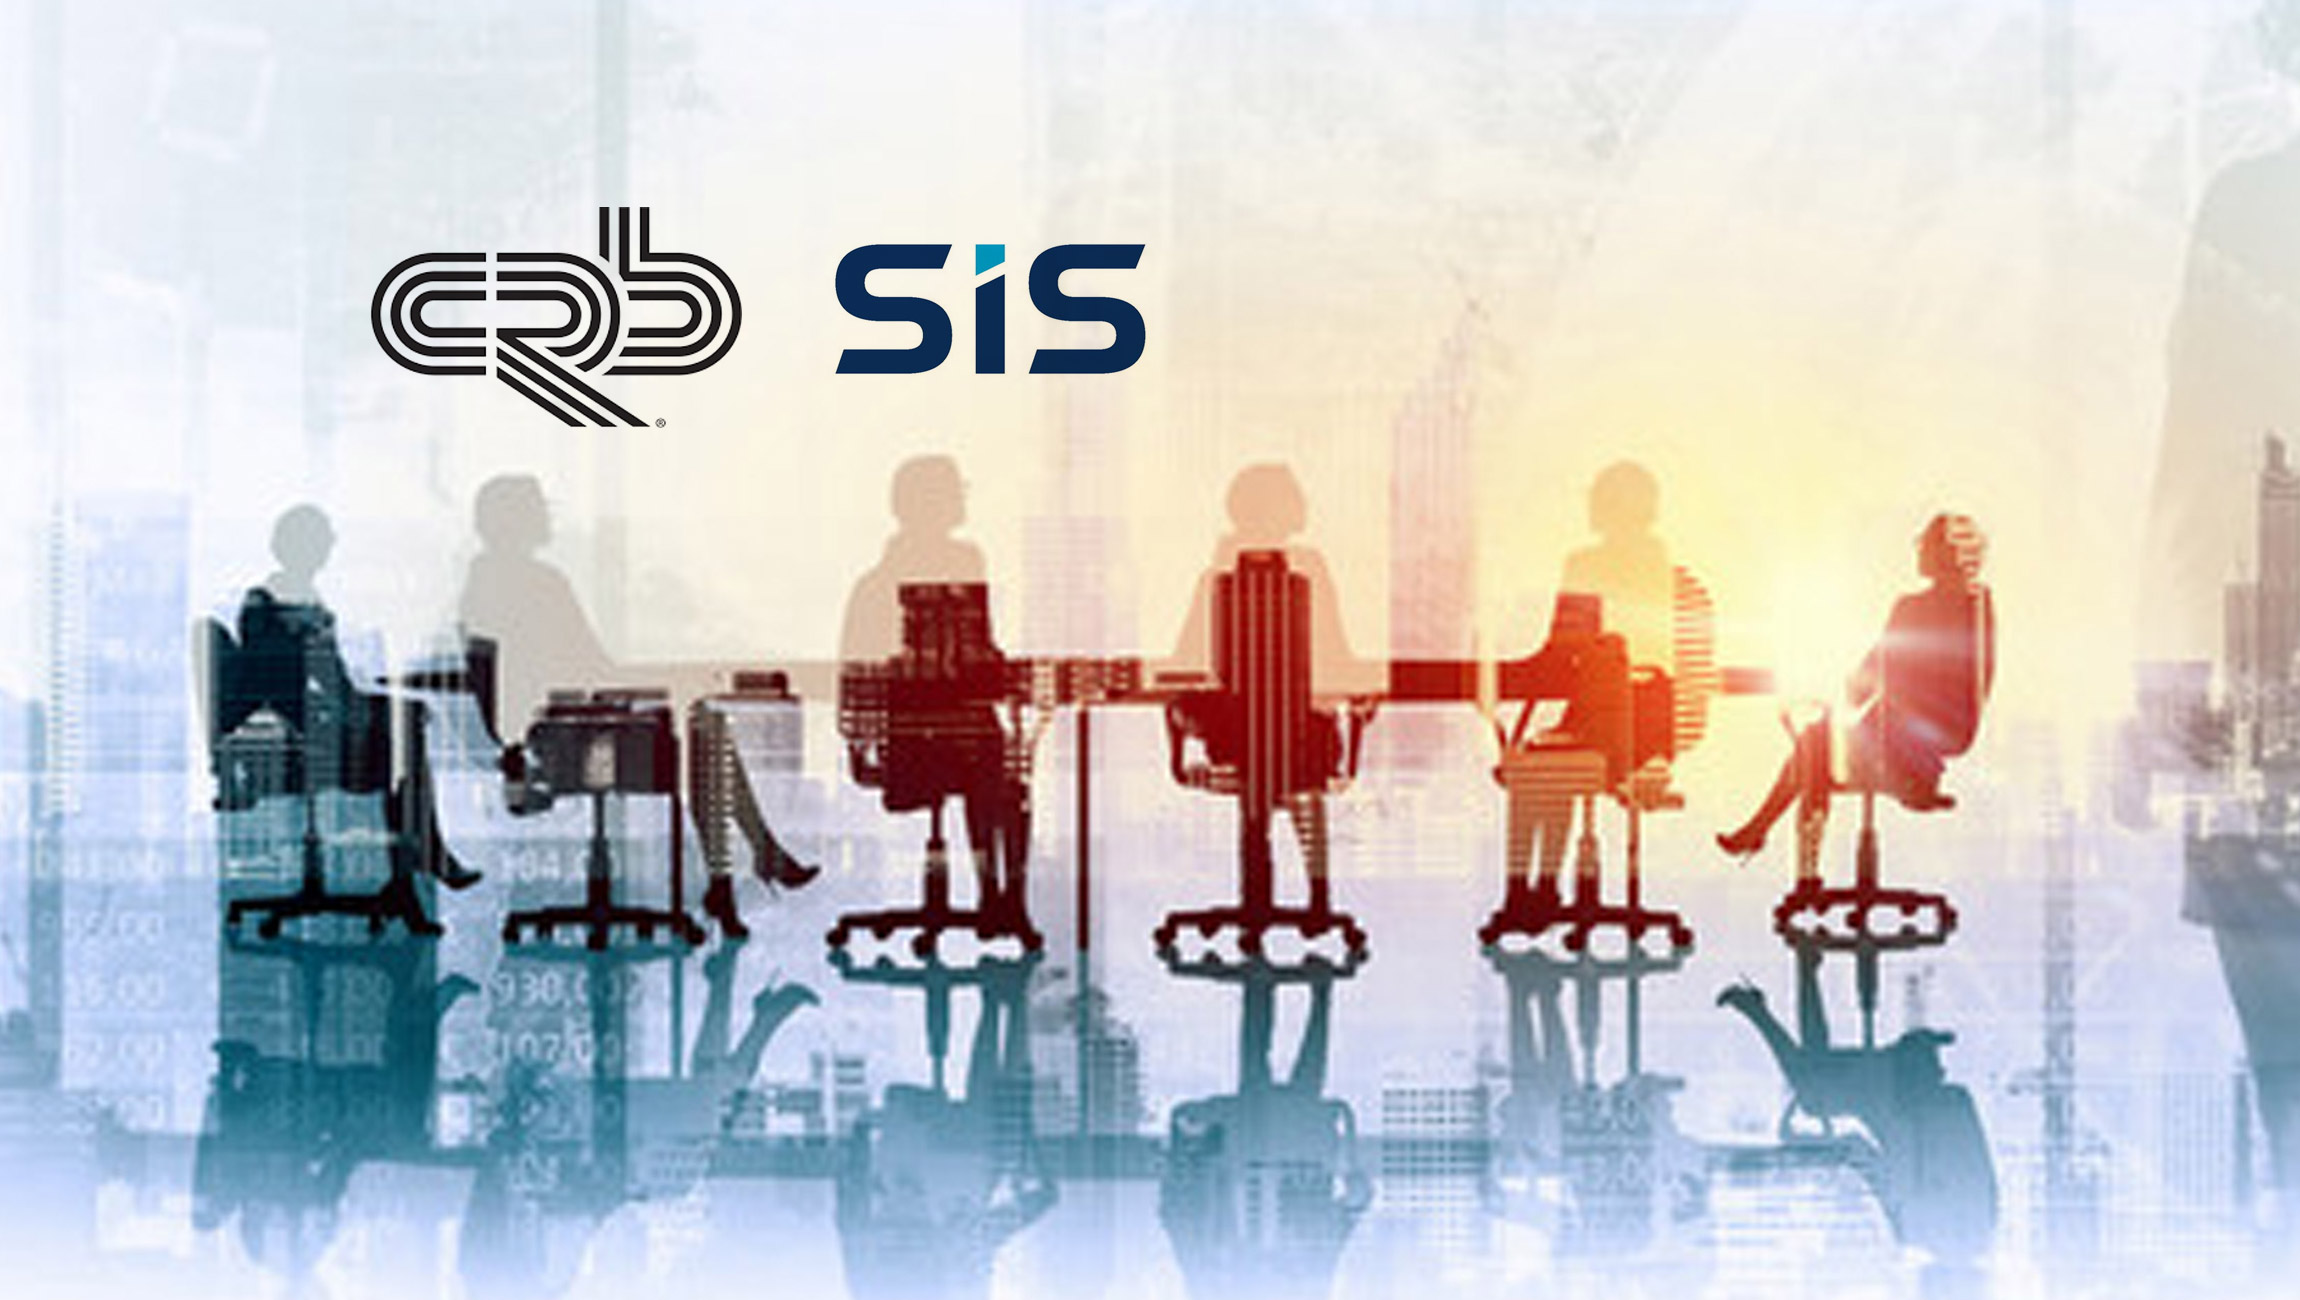 CRB Group Chooses SIS For Digital Transformation via Microsoft Dynamics 365 & SIS Construct 365